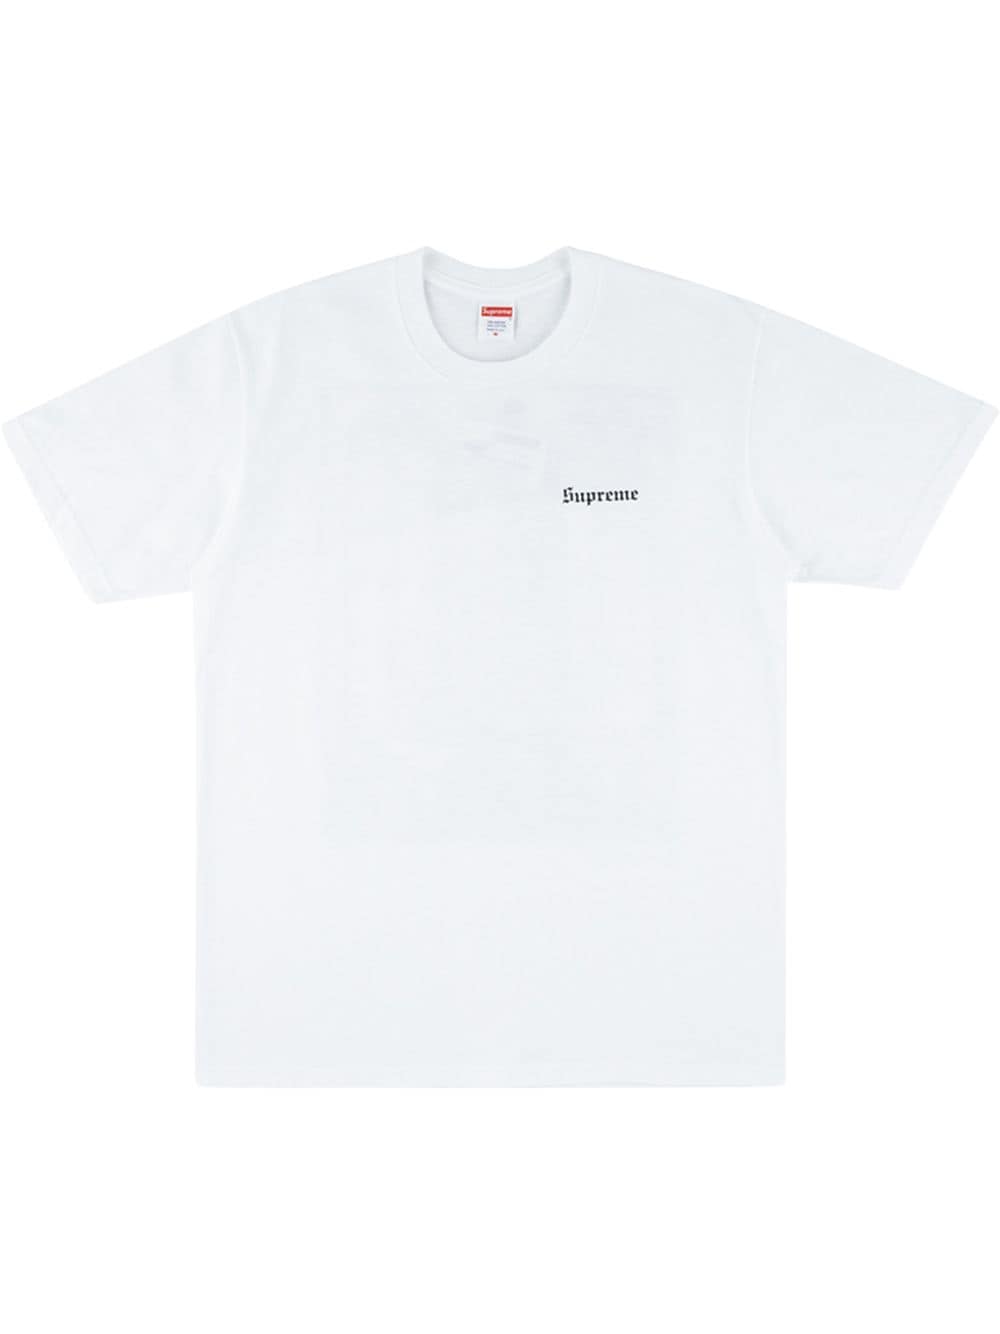 Supreme x Martin Wong Big Heat T-Shirt - White von Supreme